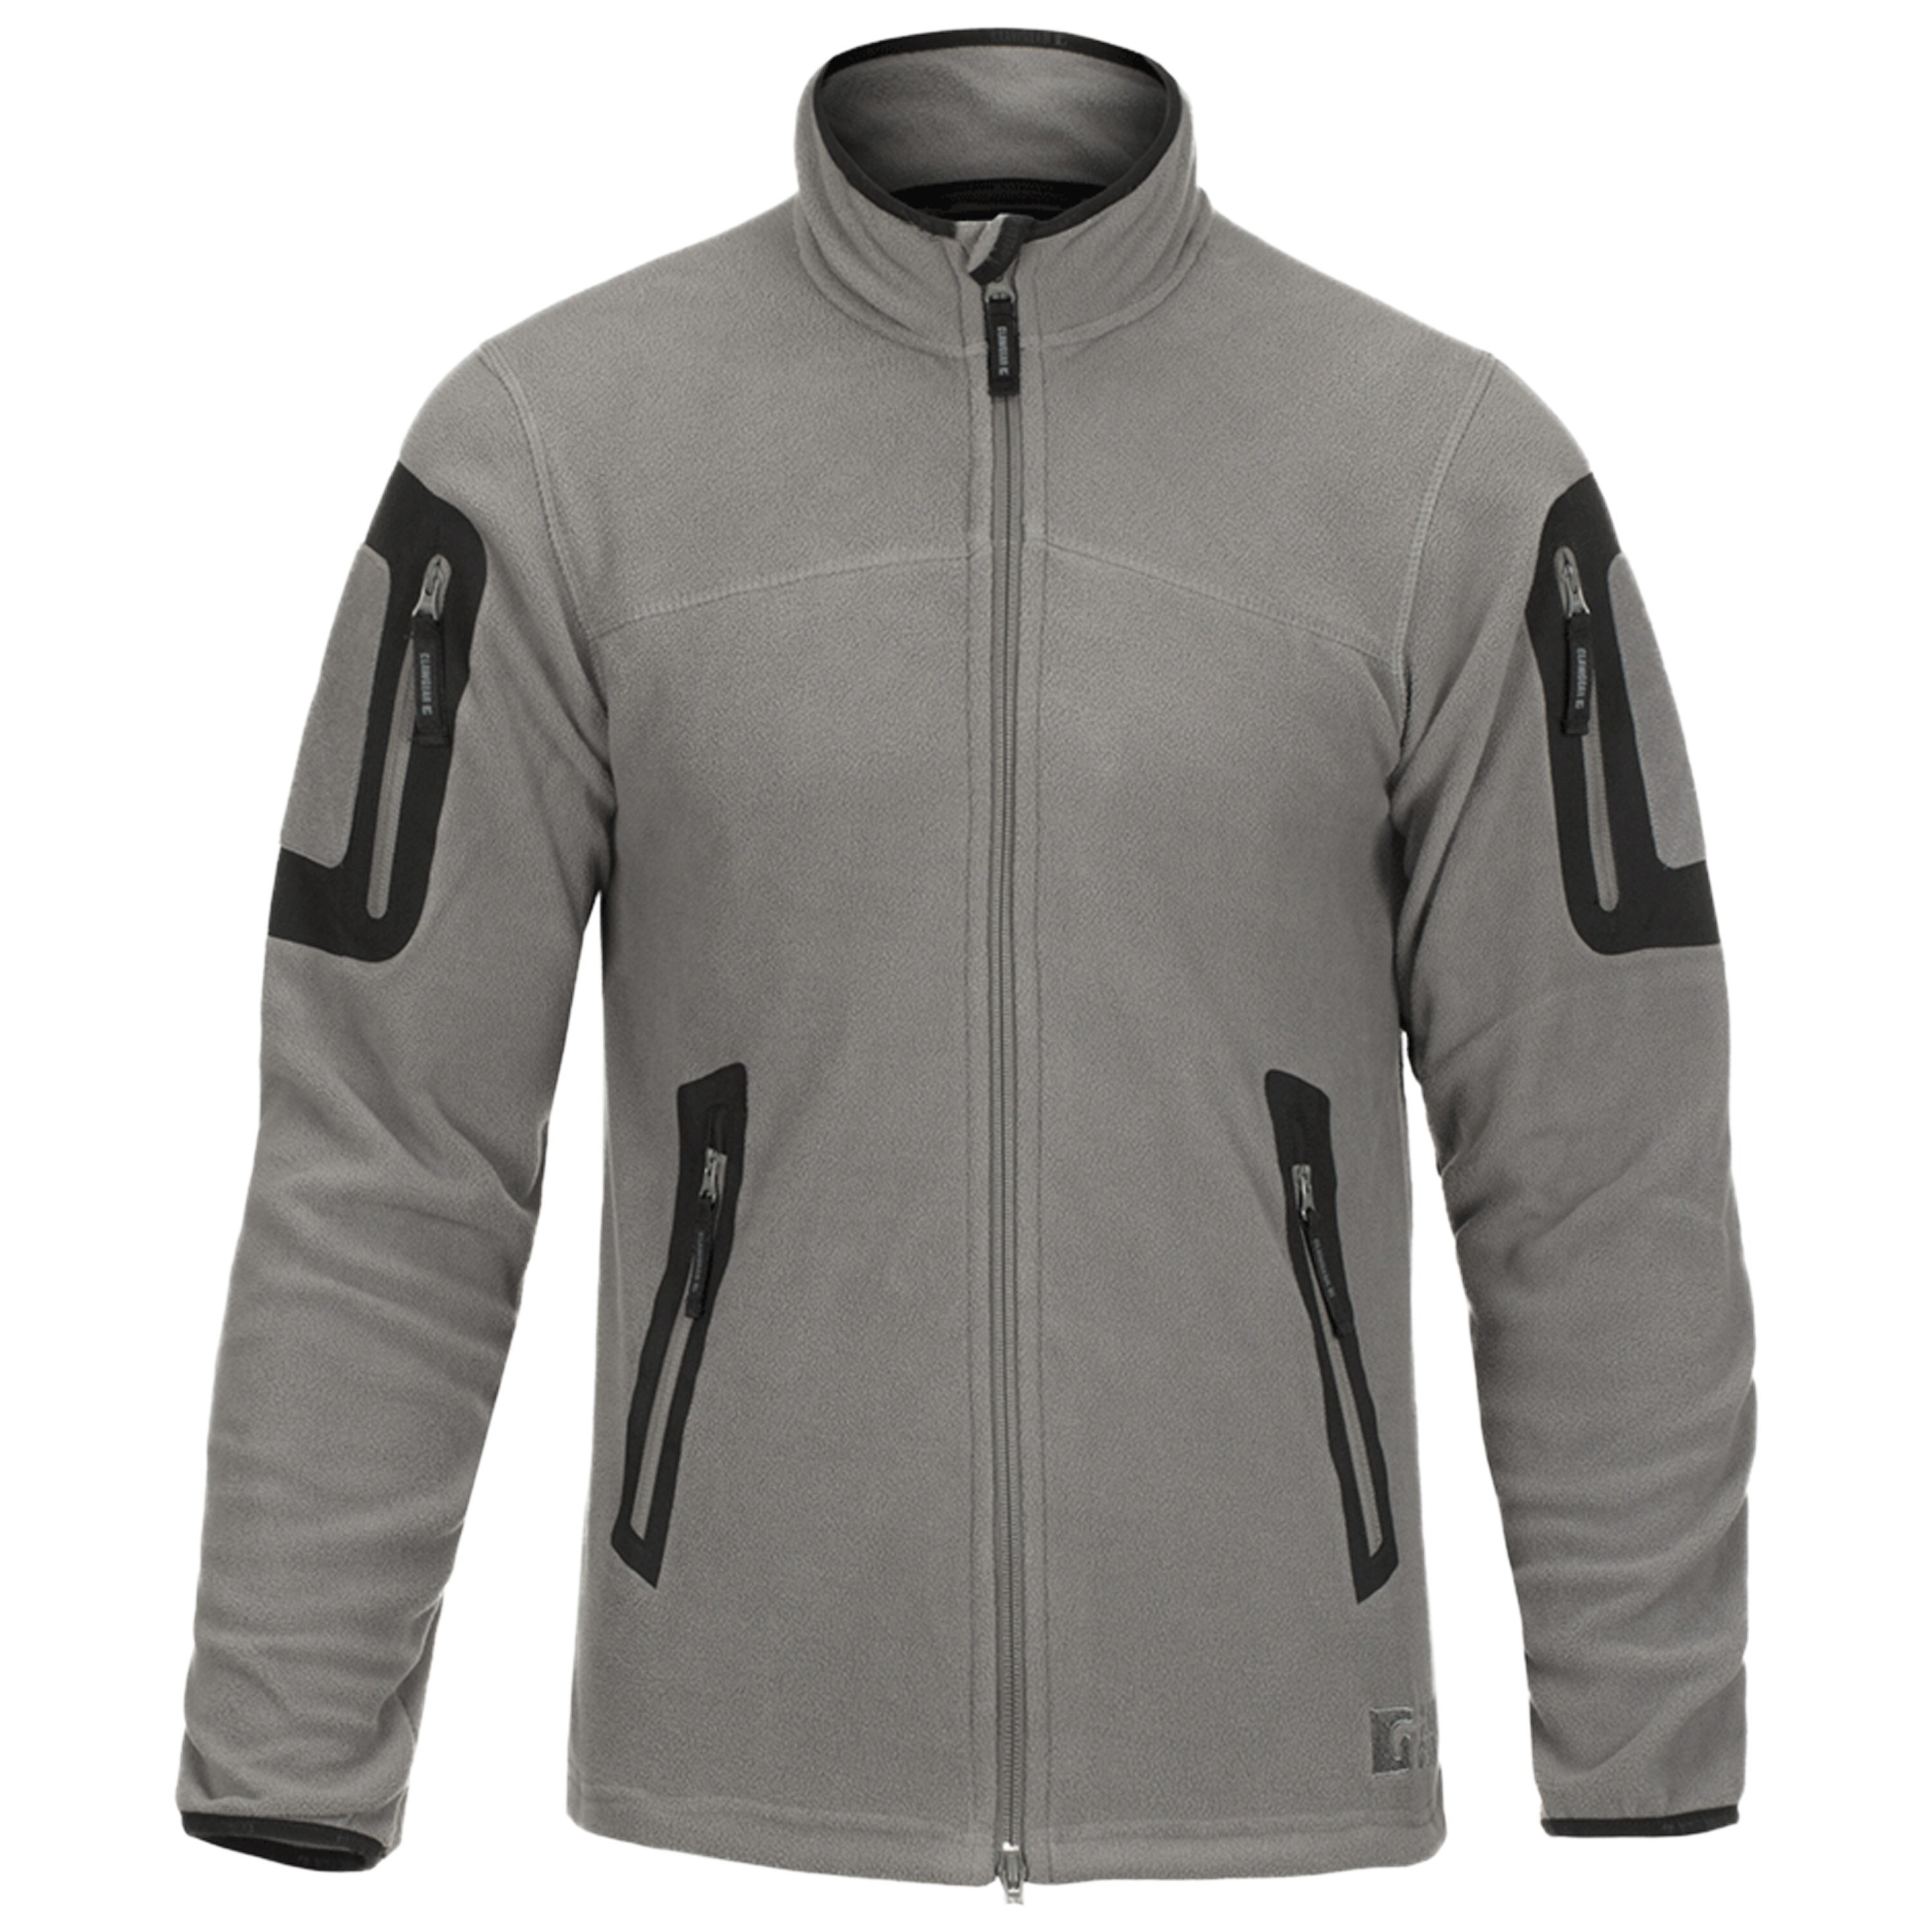 Purchase the Clawgear Jacket Aviceda Fleece gray by ASMC